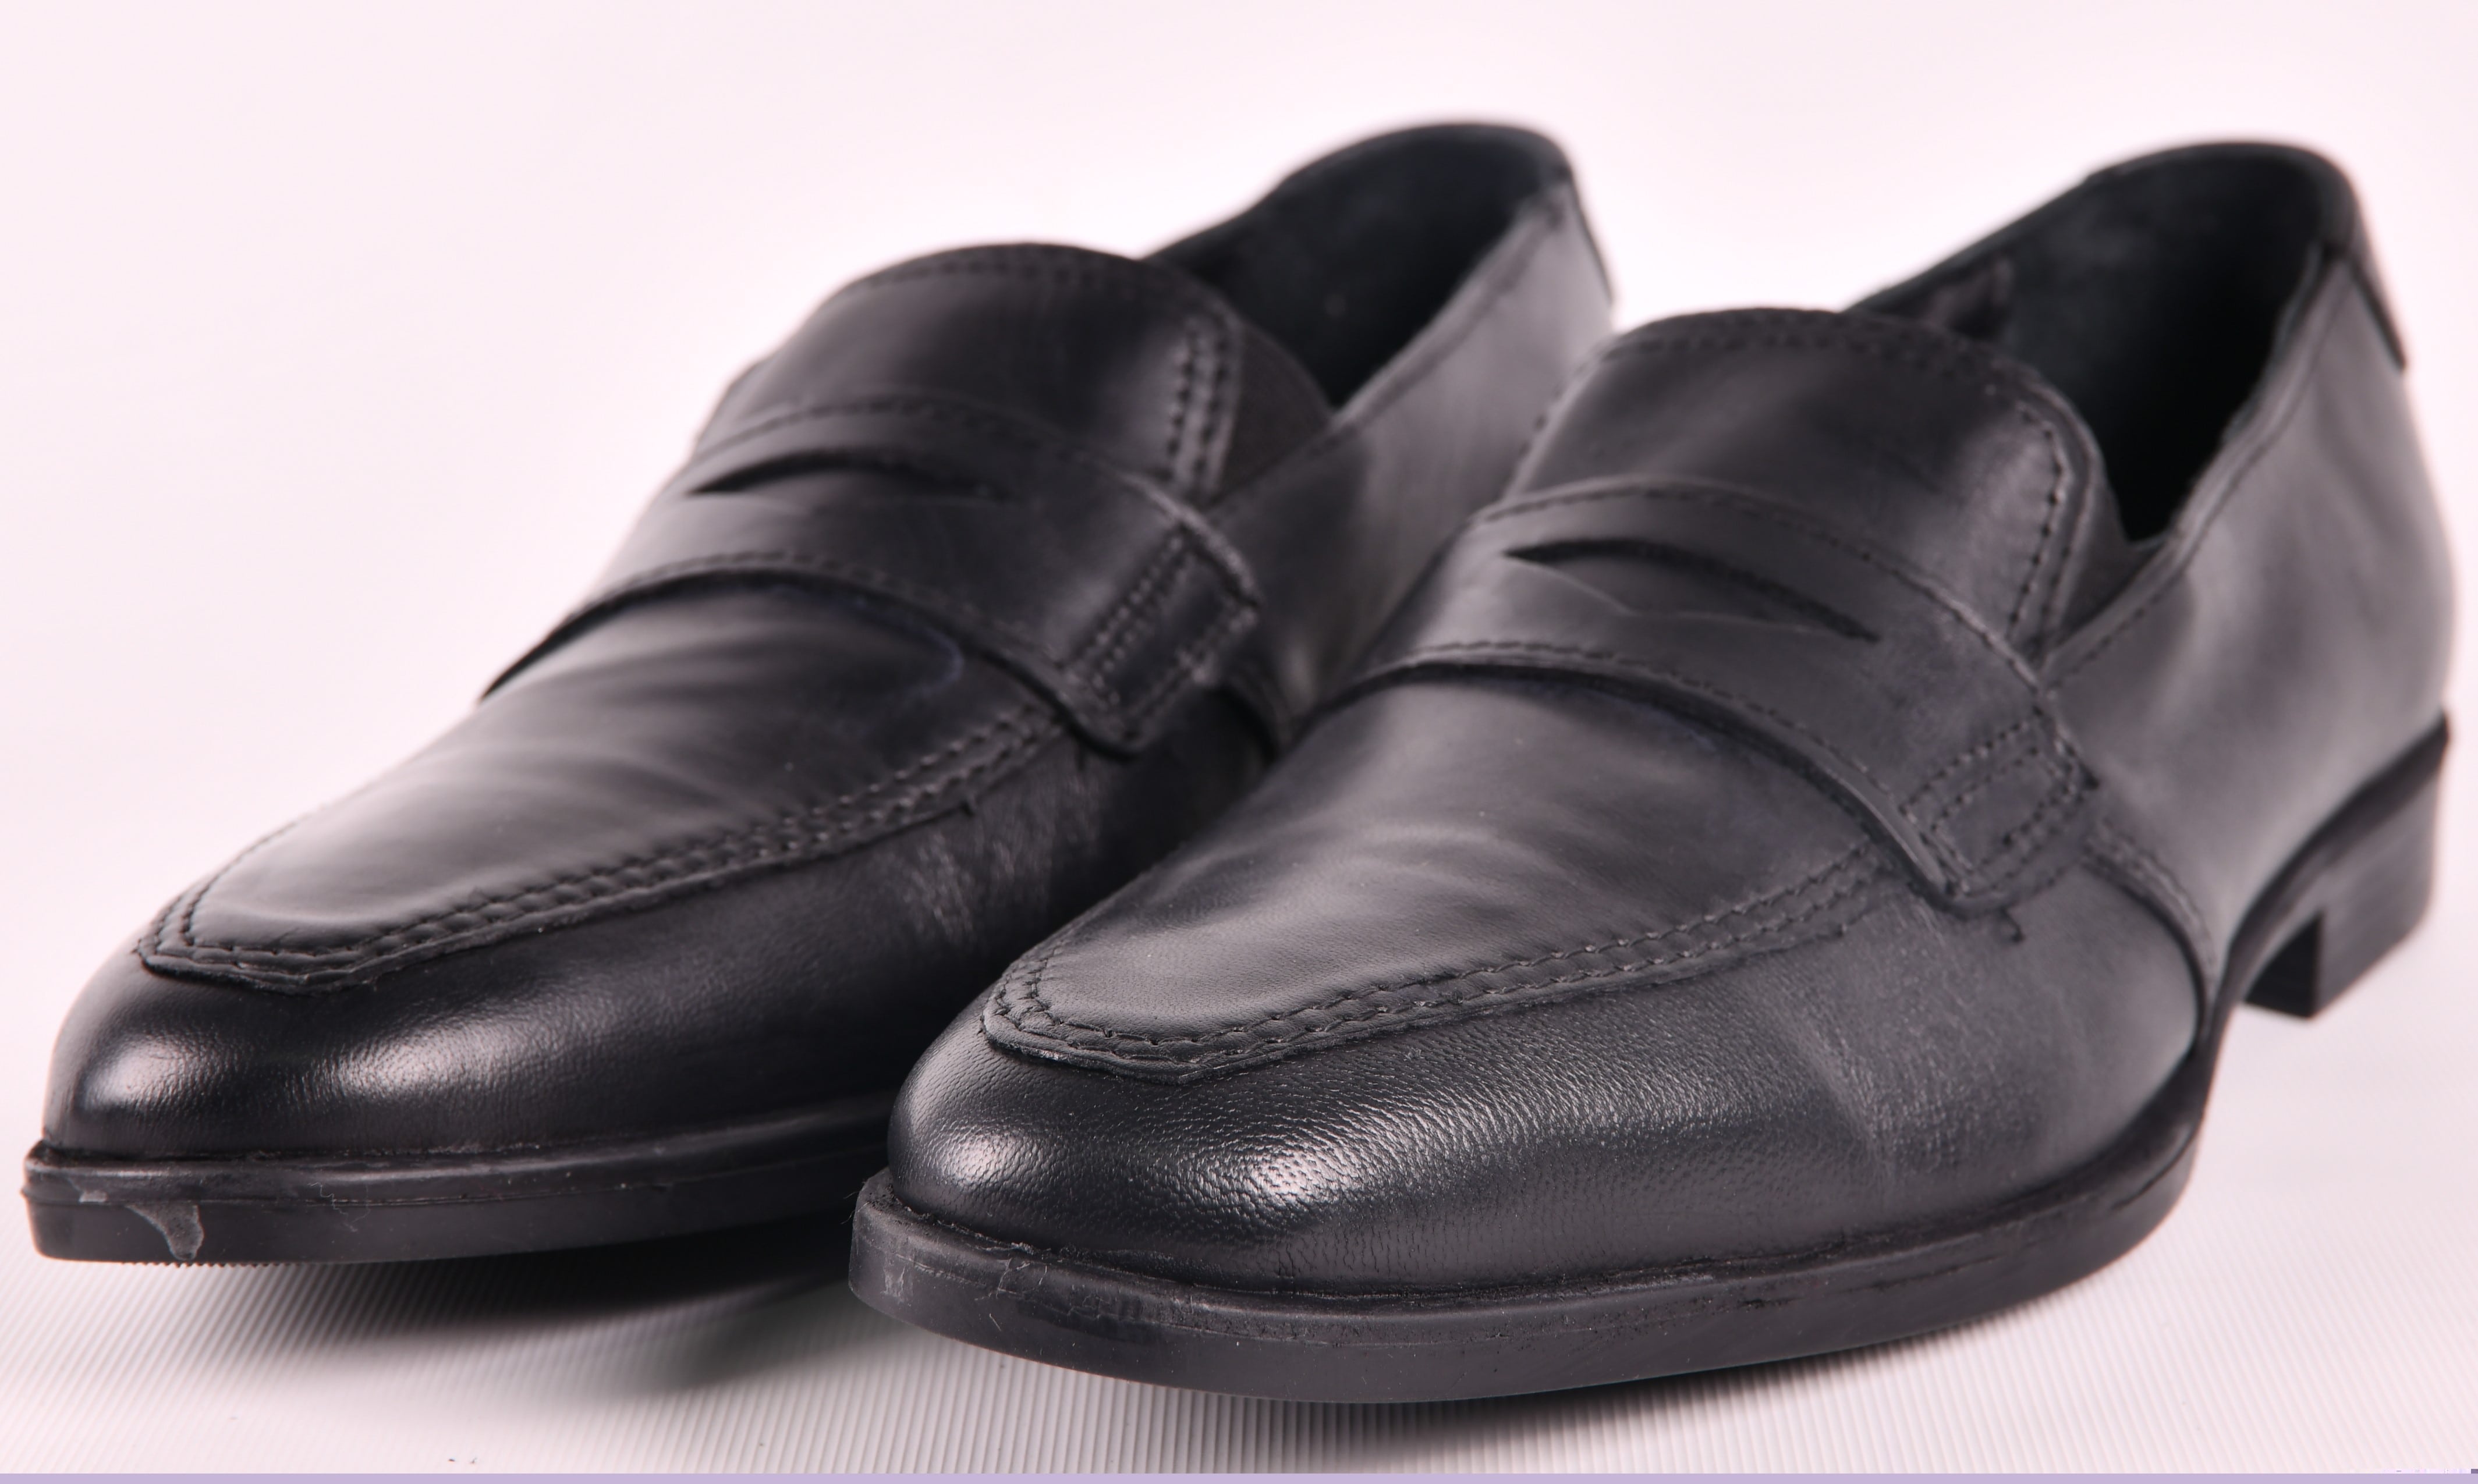 AR5011 - Anbessa Shoe Share Company in Ethiopia